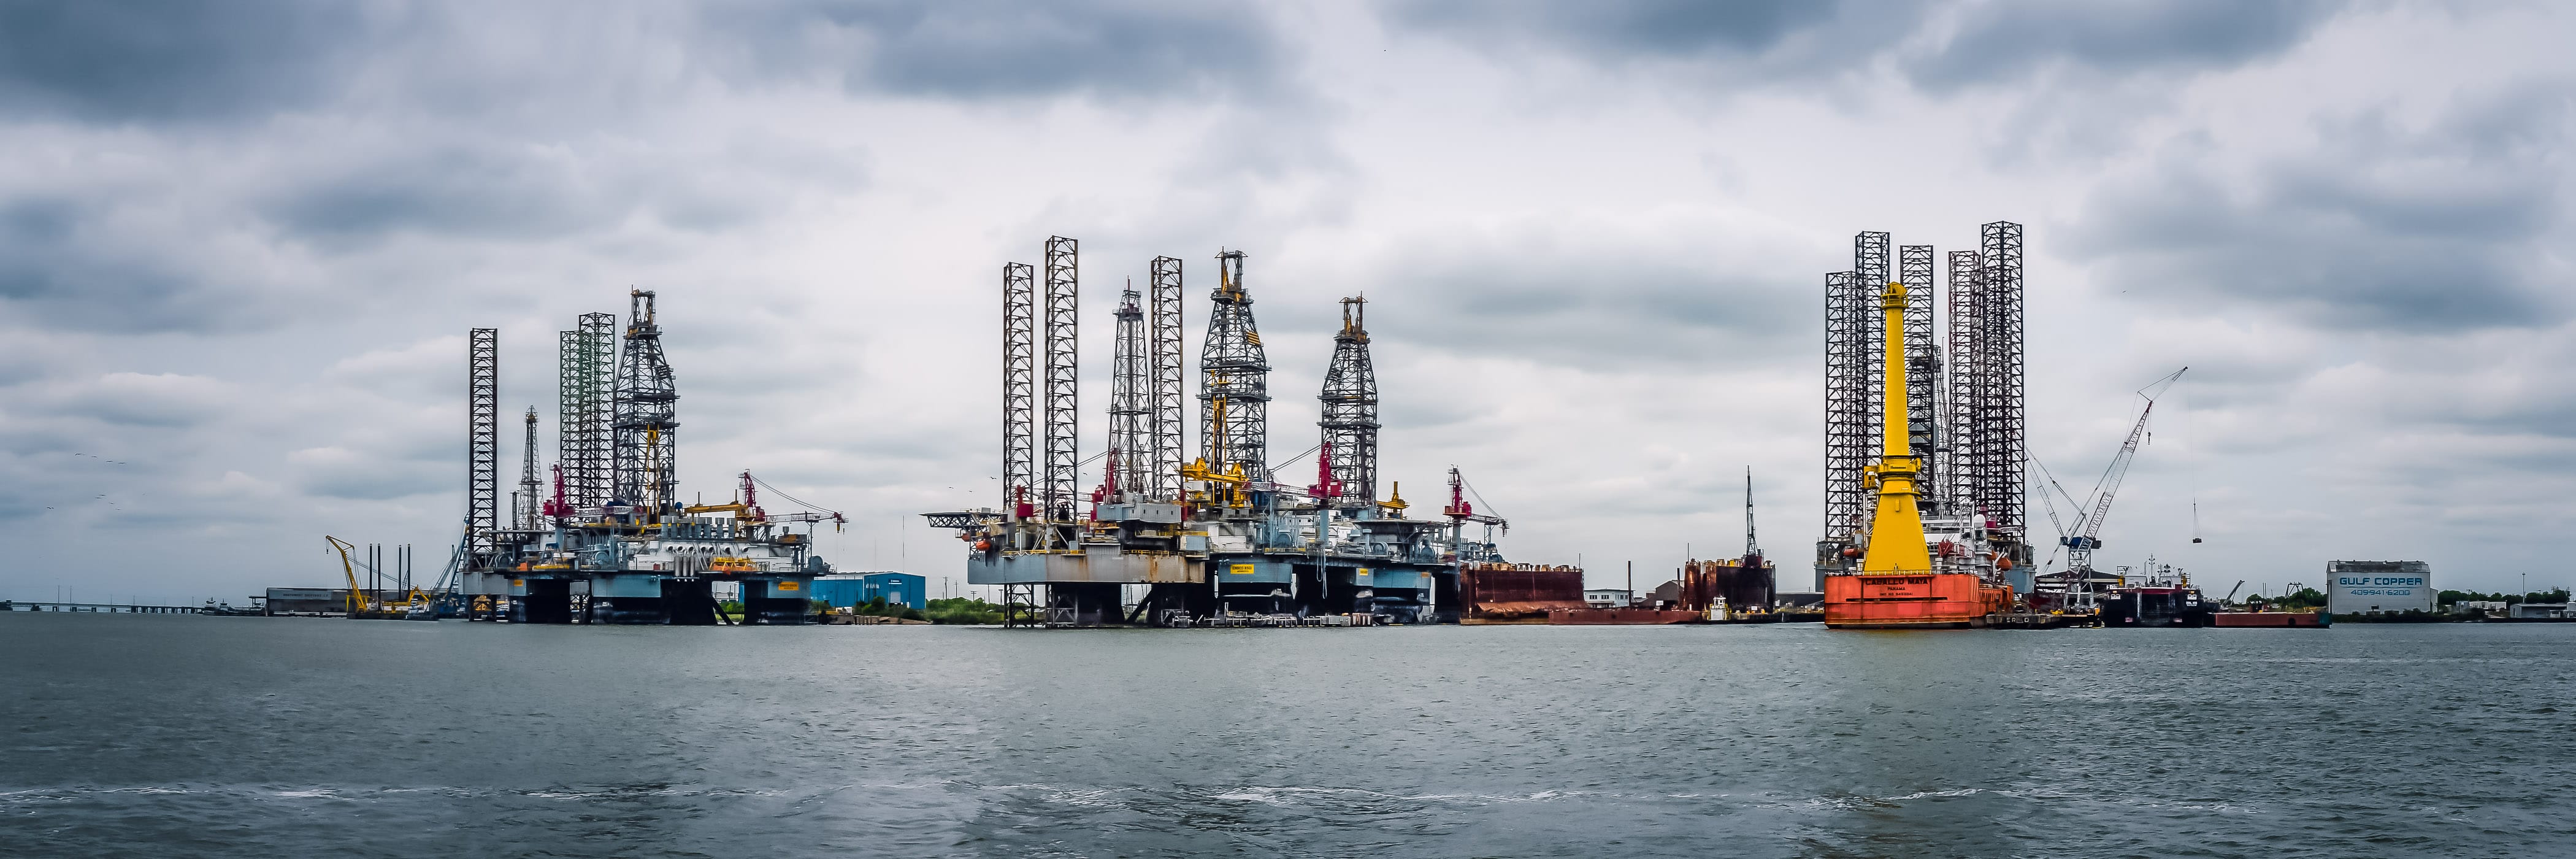 Oil platforms in storage at Pelican Island, Galveston, Texas.